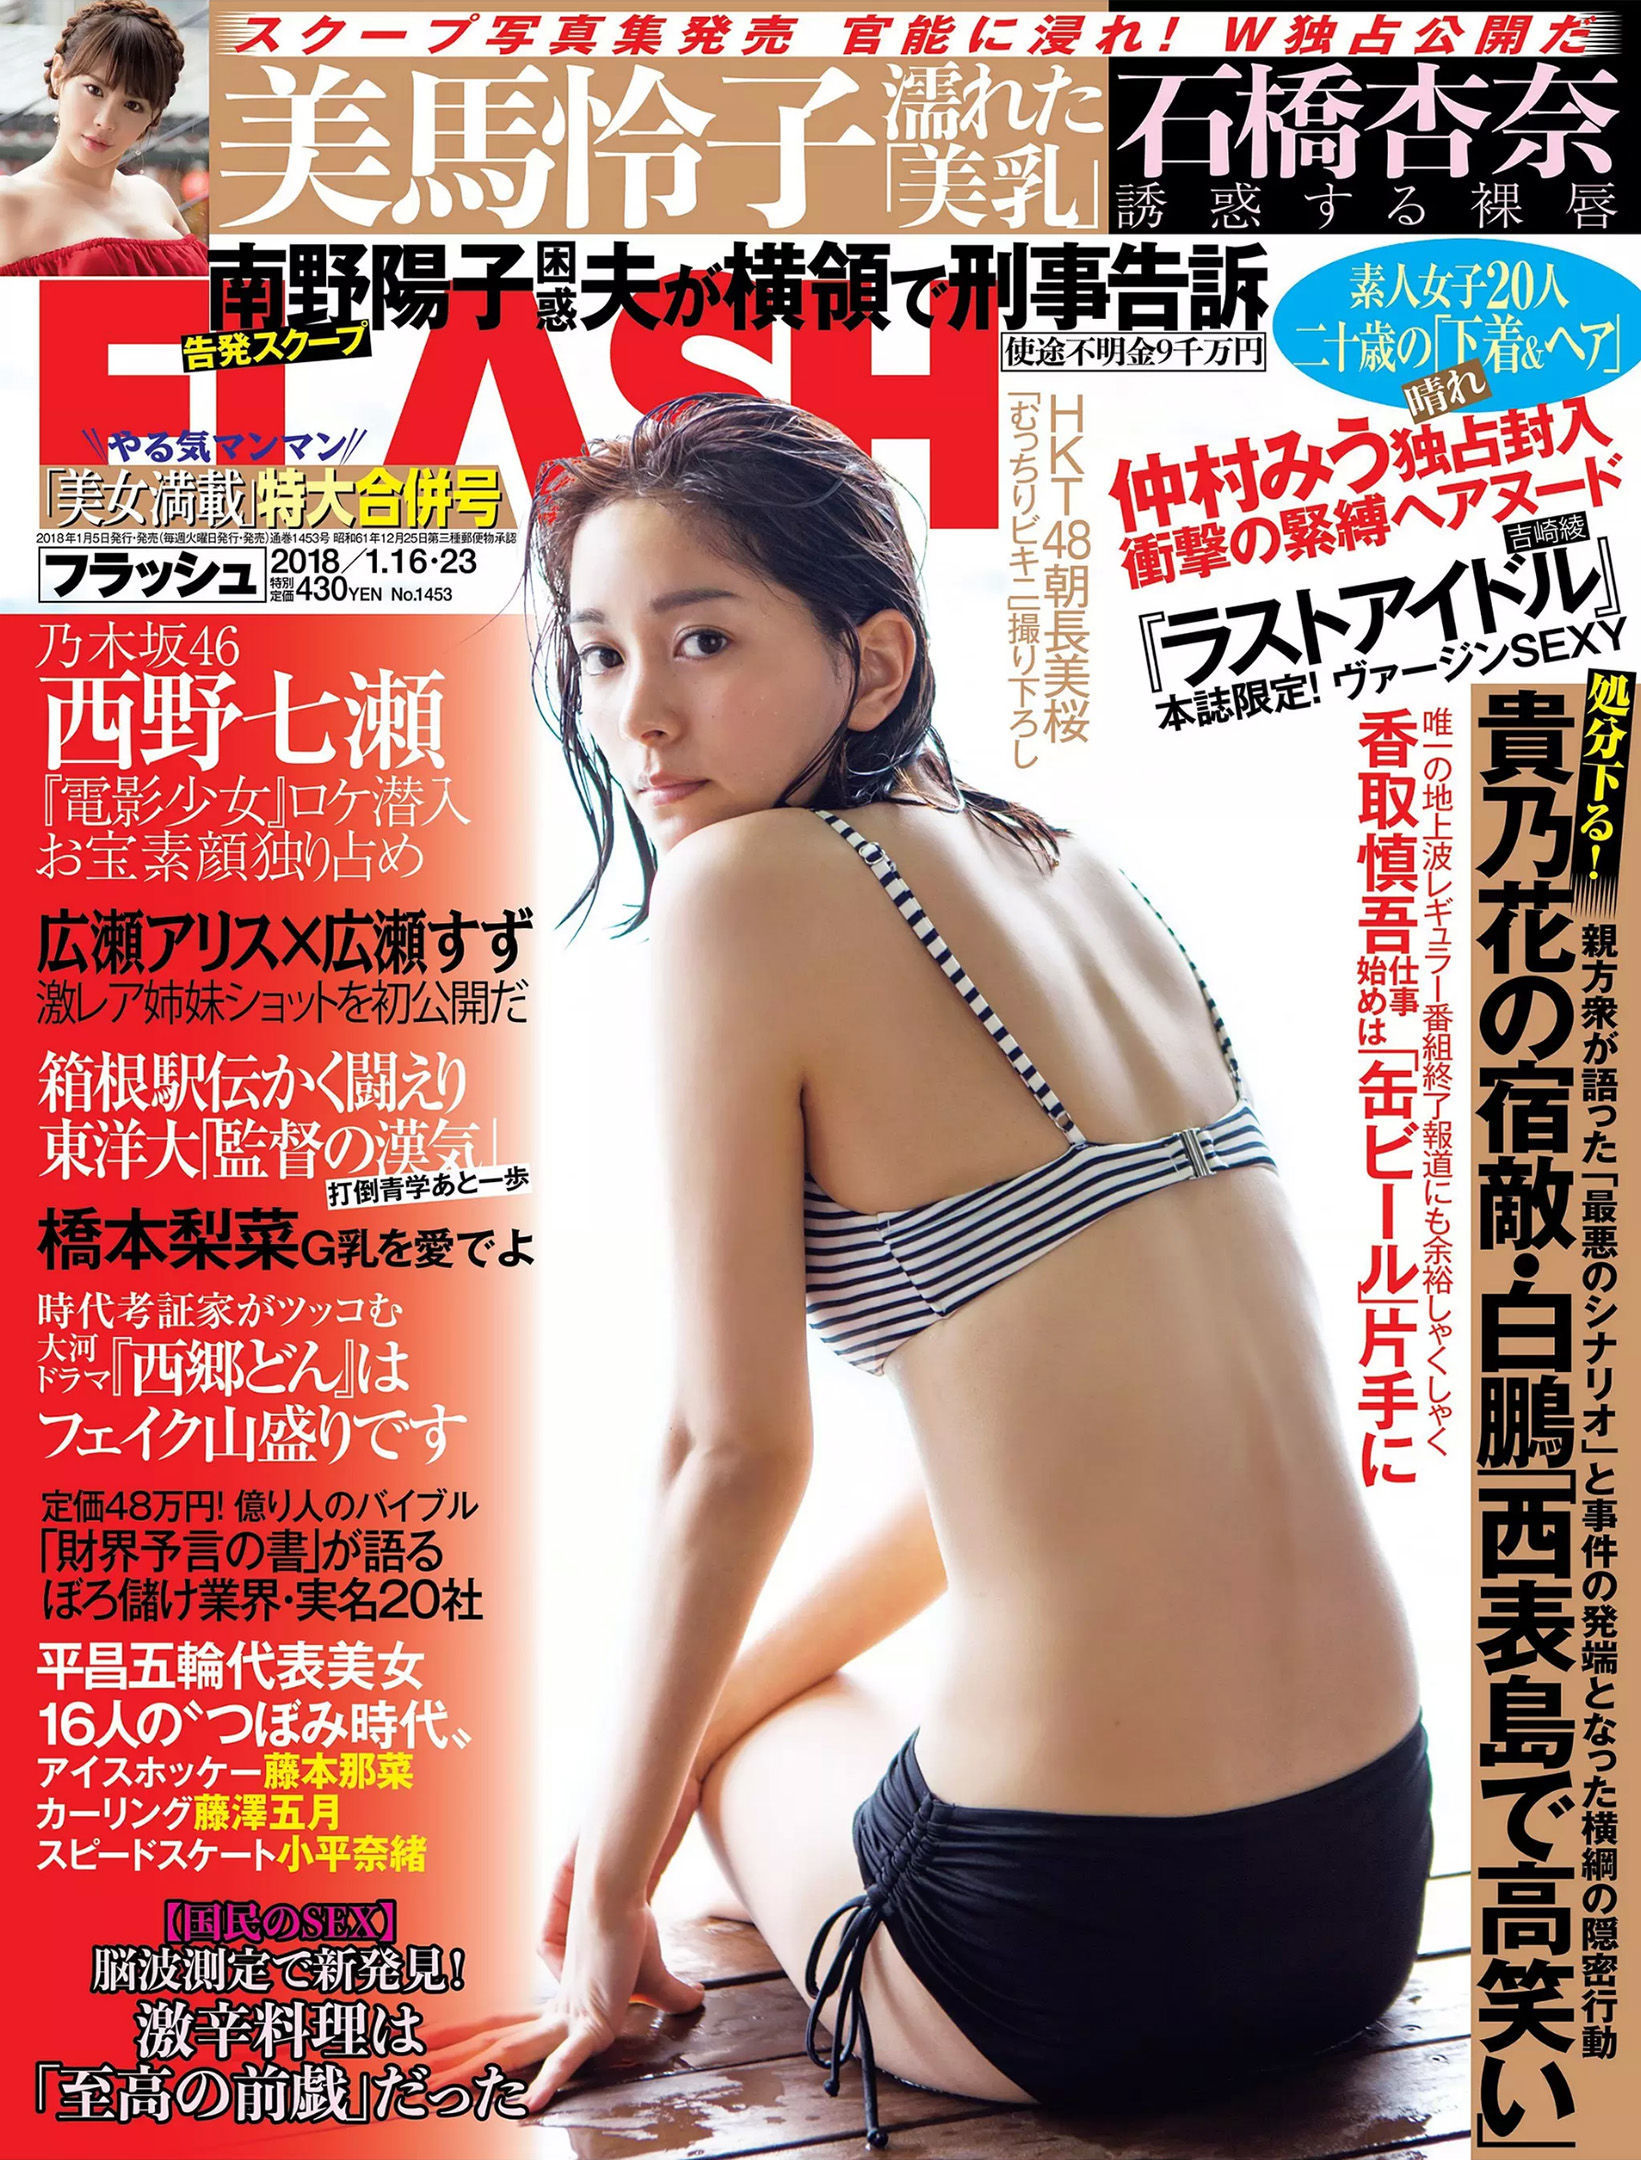 [FLASH]杂志:石桥杏奈高品质私家拍摄作品在线浏览(22P)